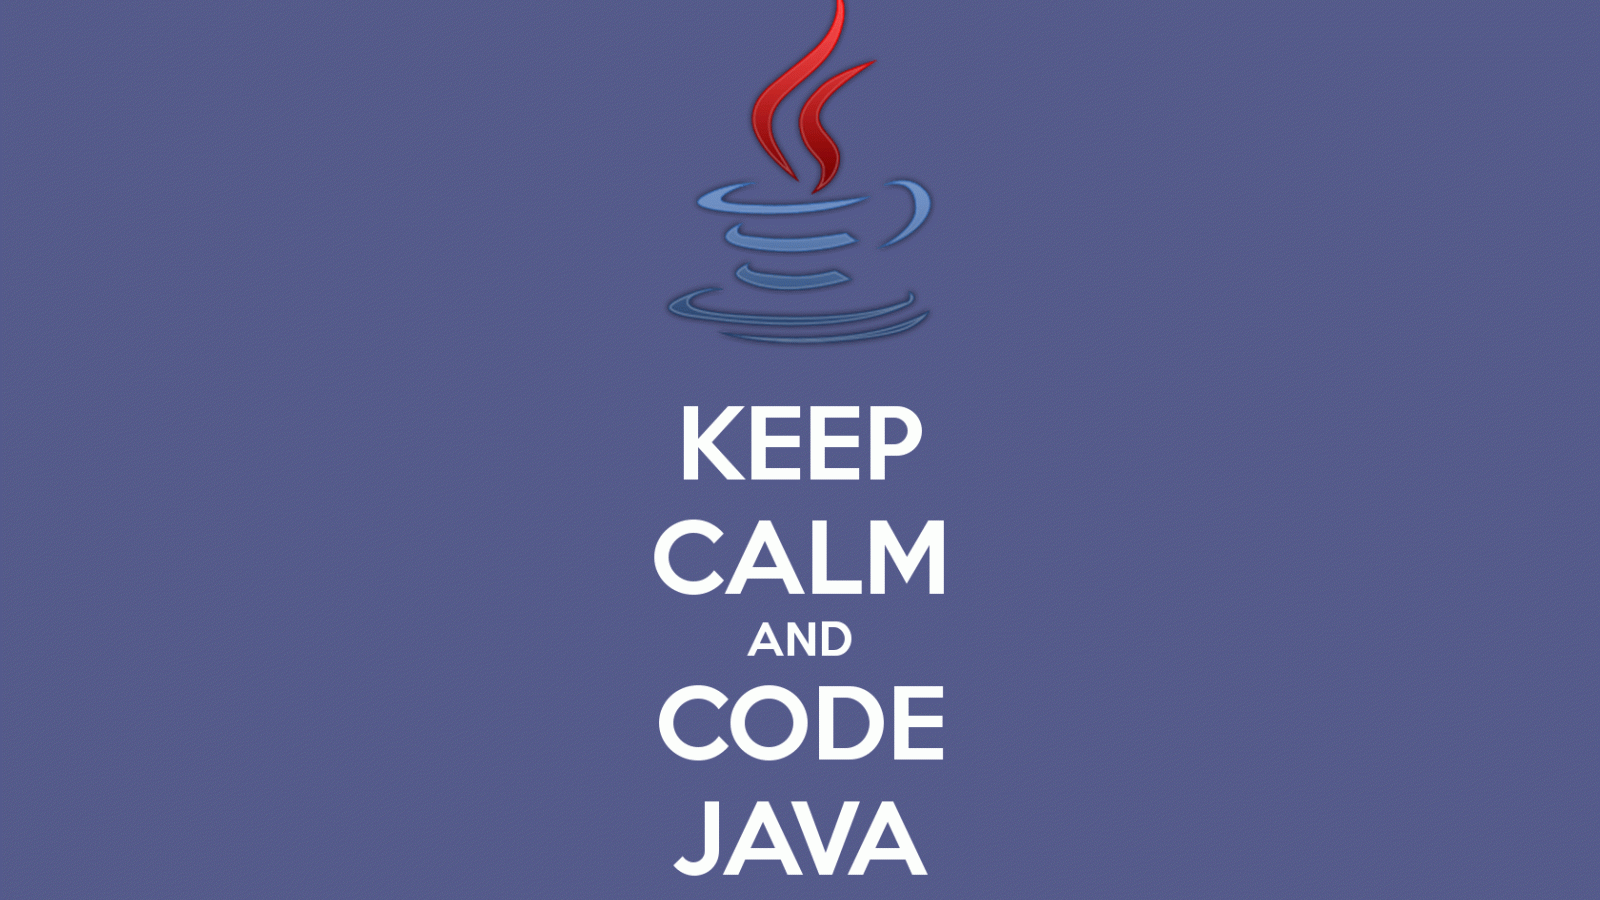 Free download 50 Java Programming Wallpaper Download at